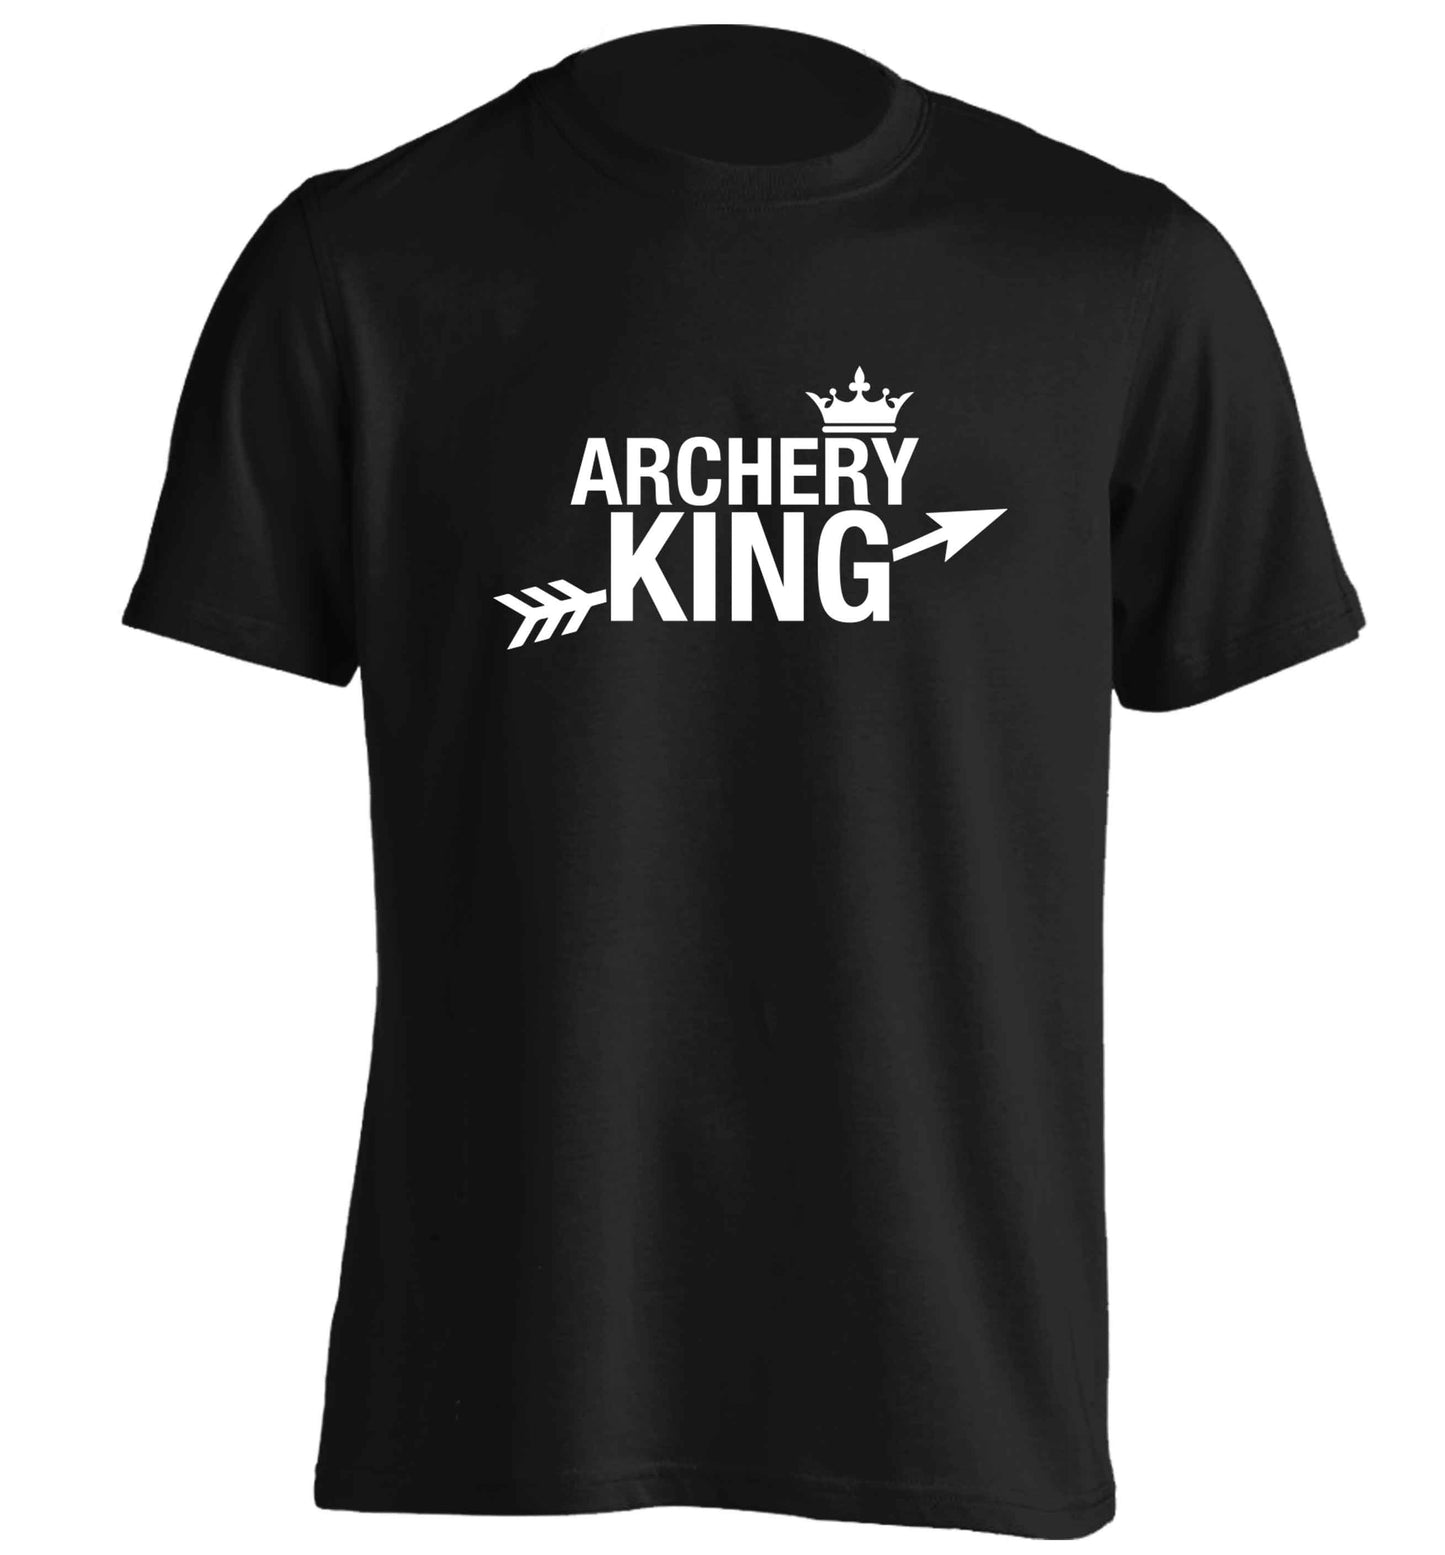 Archery king adults unisex black Tshirt 2XL